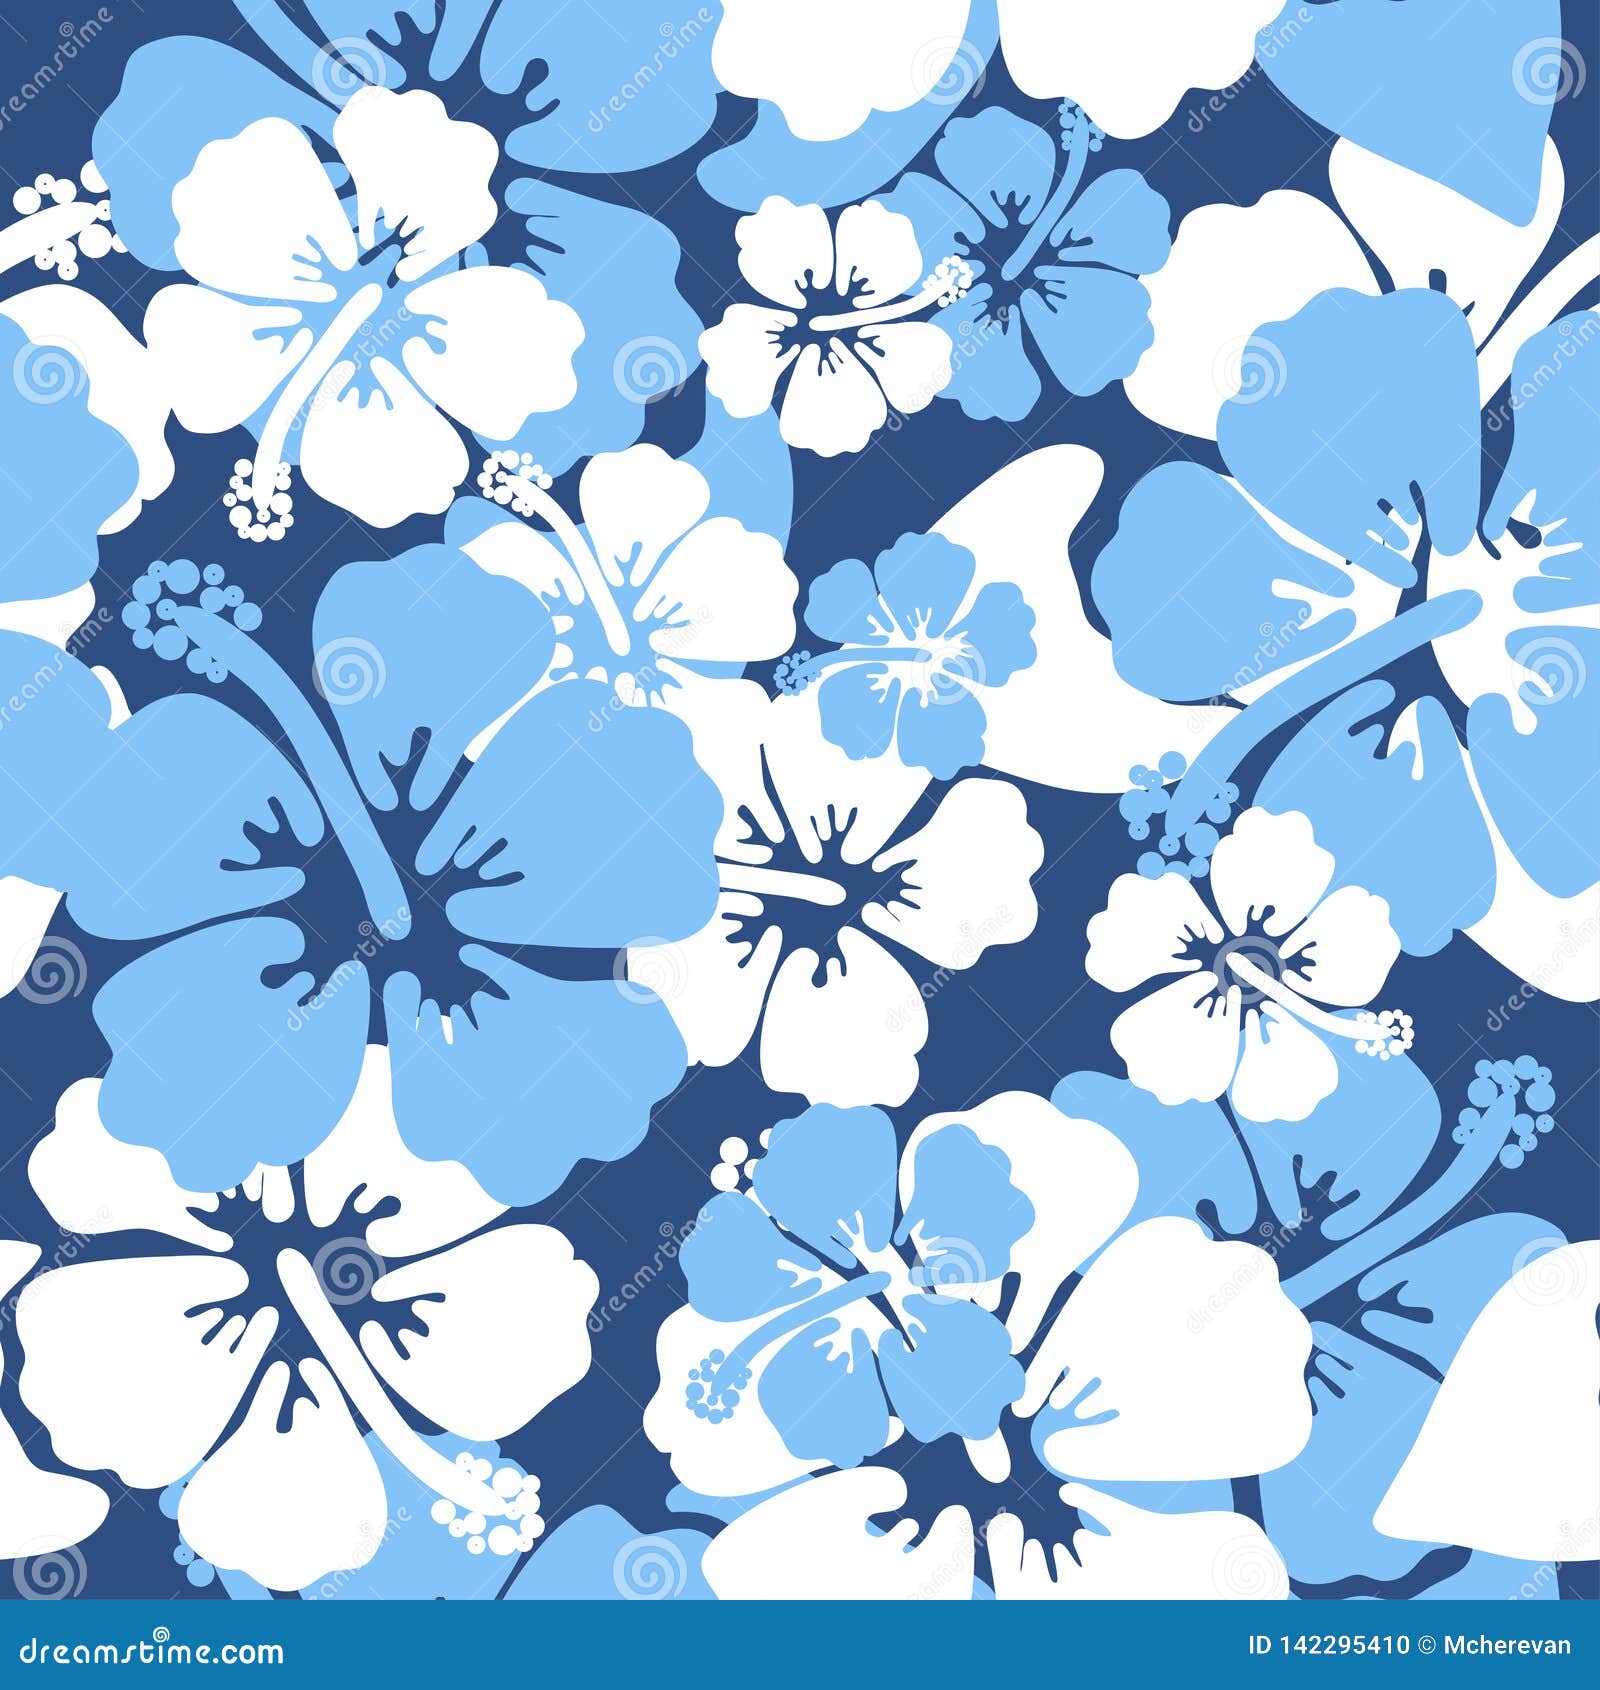 Hibiscus Seamless Background Vector Design Summer Shirt Stock Illustration  - Illustration of hibiscus, leaf: 142295410